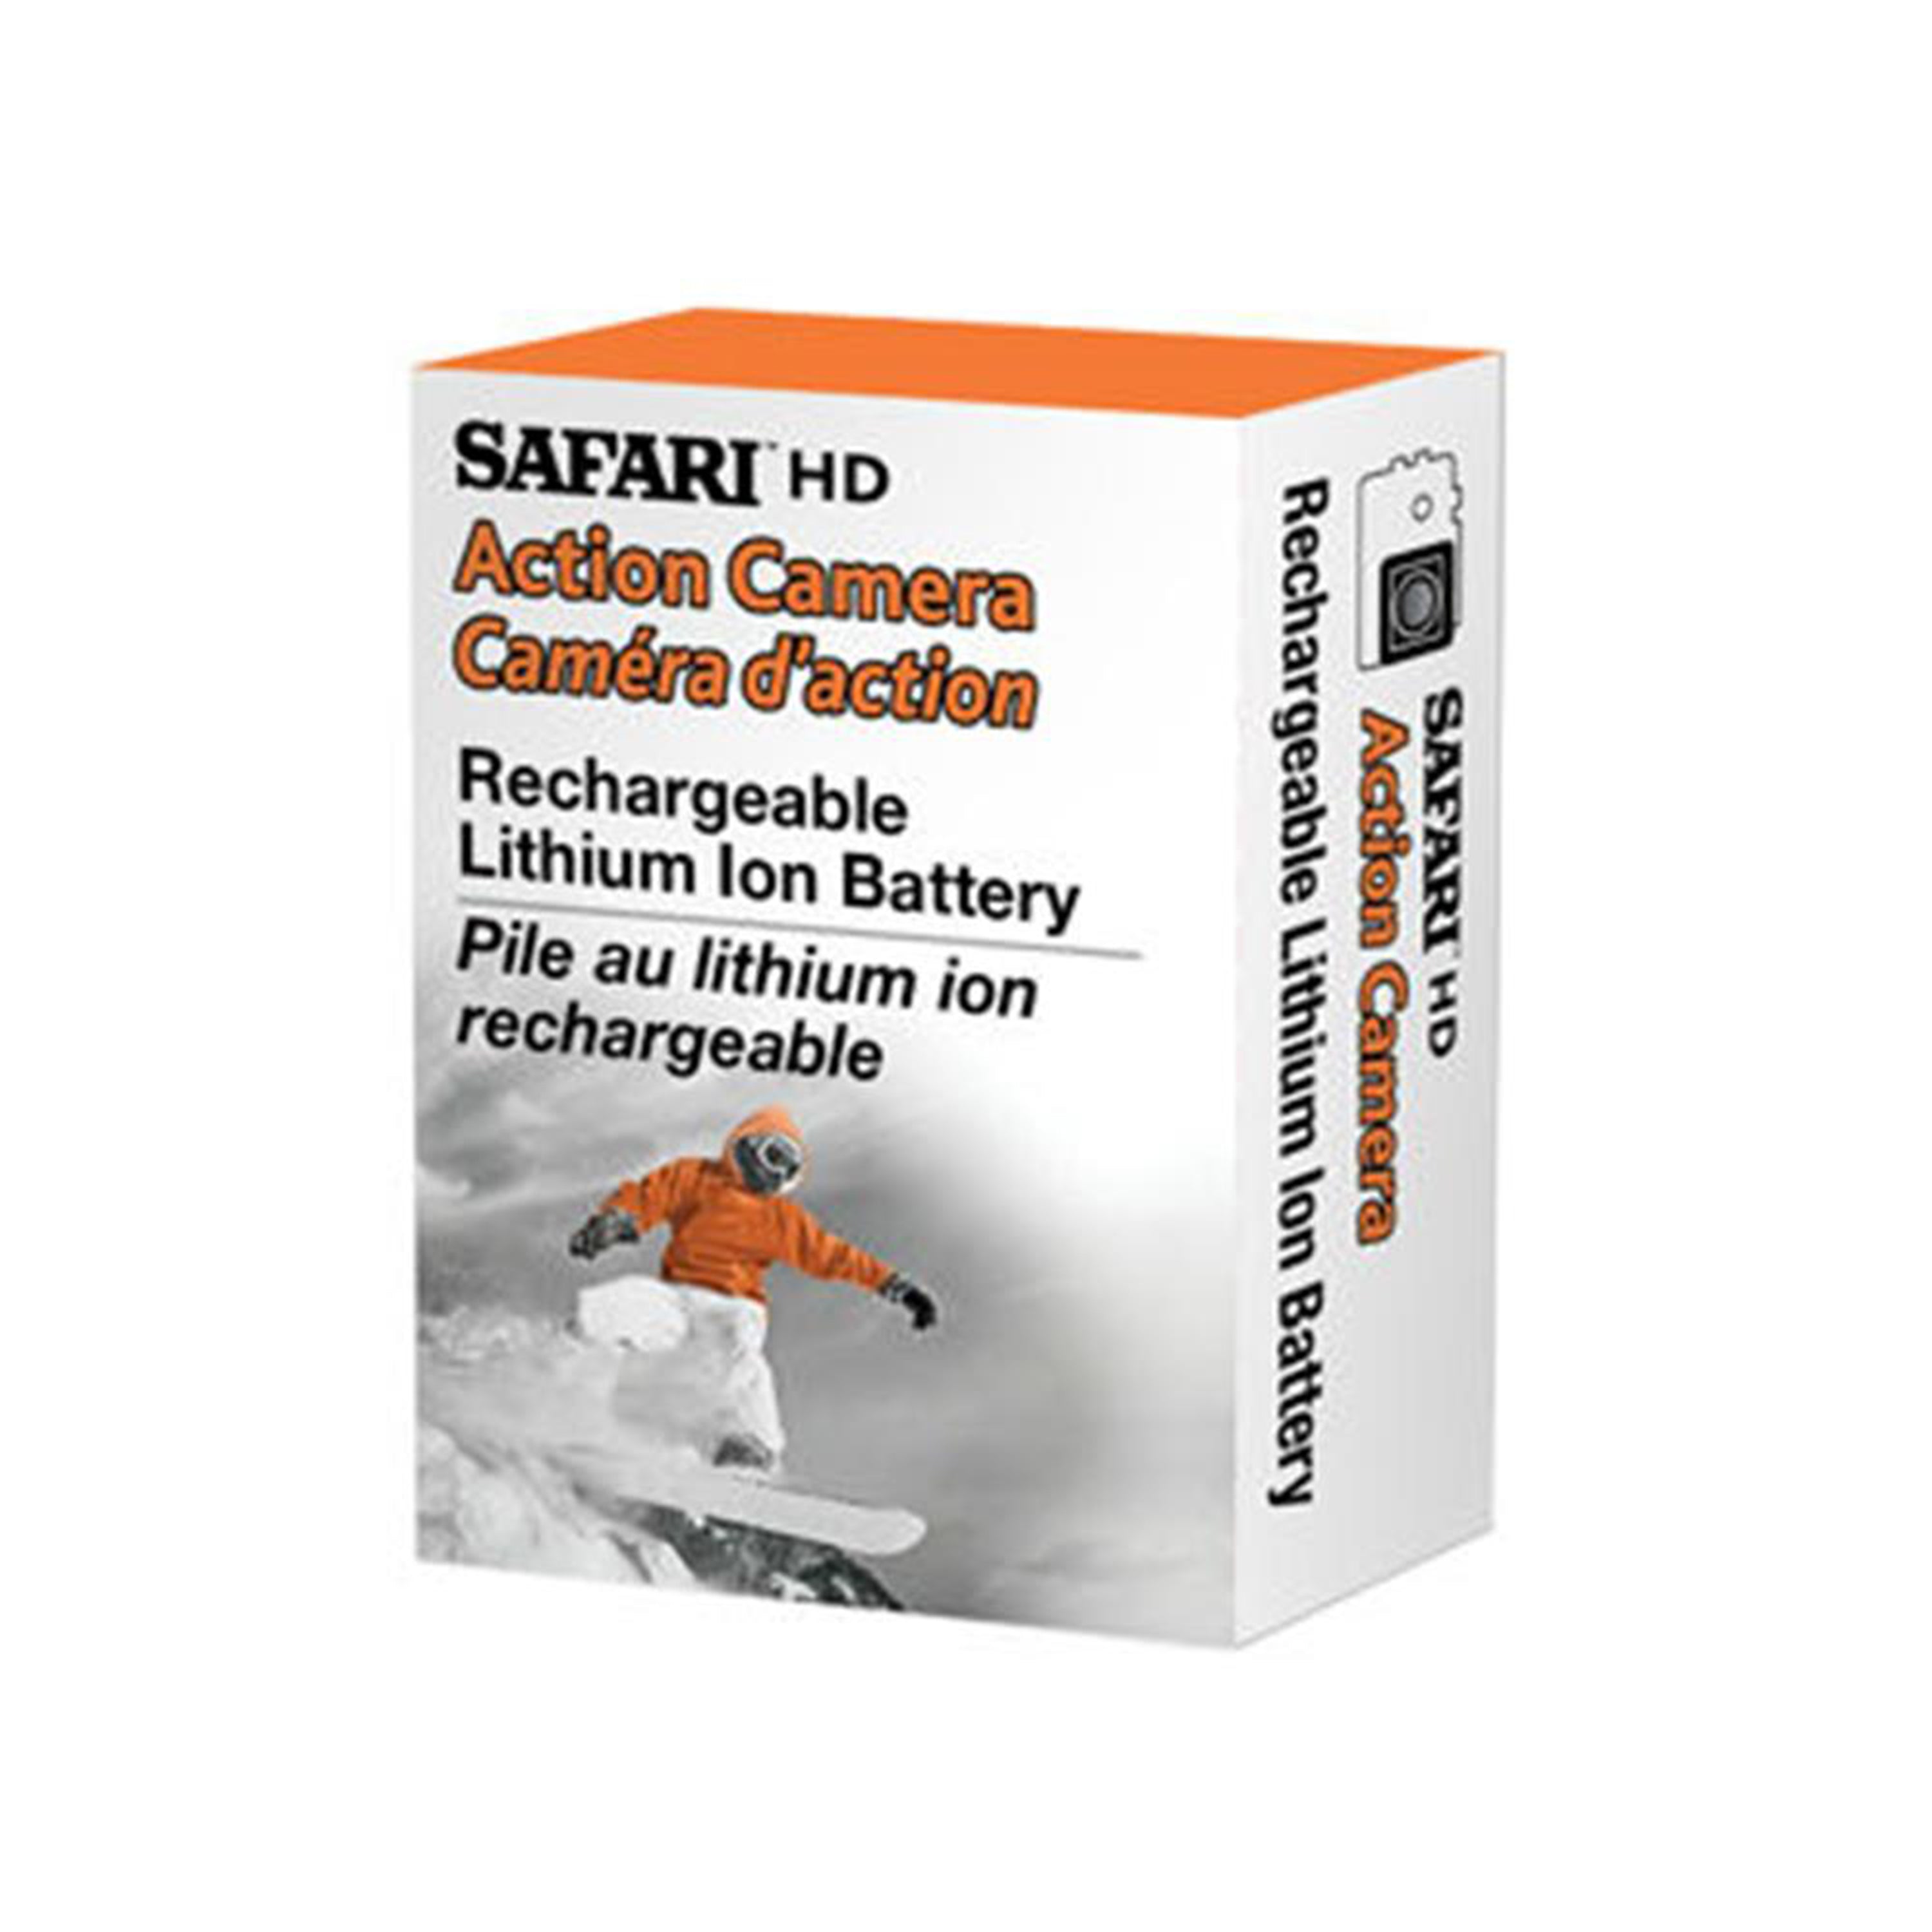 Safari Replacement Battery for Safari Action Cams